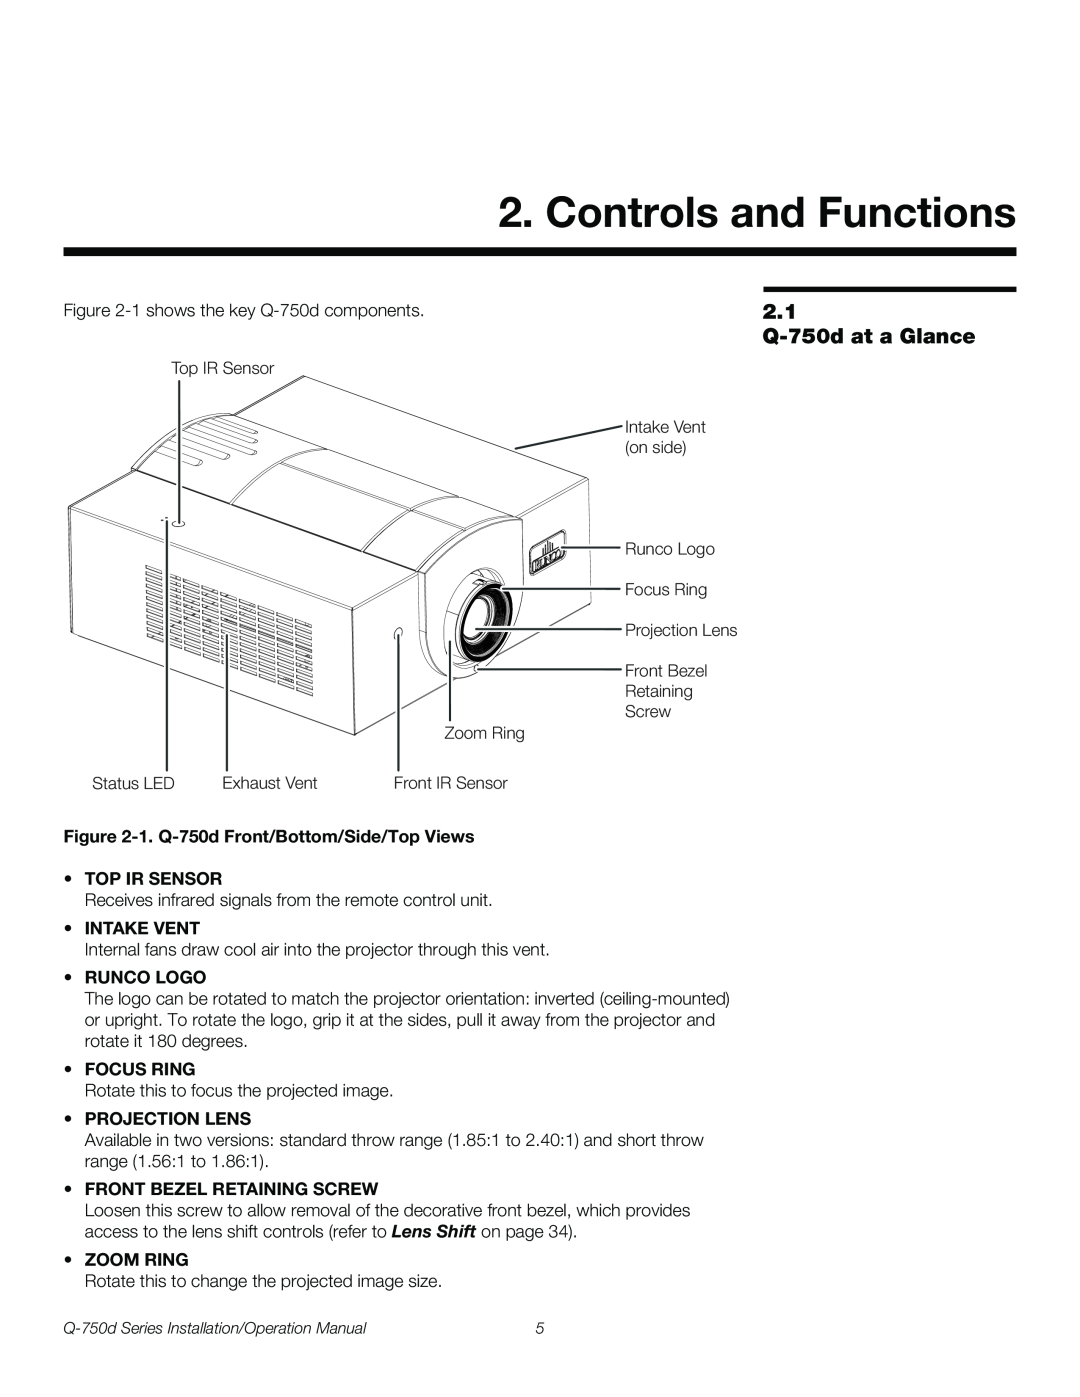 Runco Q-750D Controls and Functions, 2.1 Q-750dat a Glance, 1. Q-750dFront/Bottom/Side/Top Views, •Top Ir Sensor 